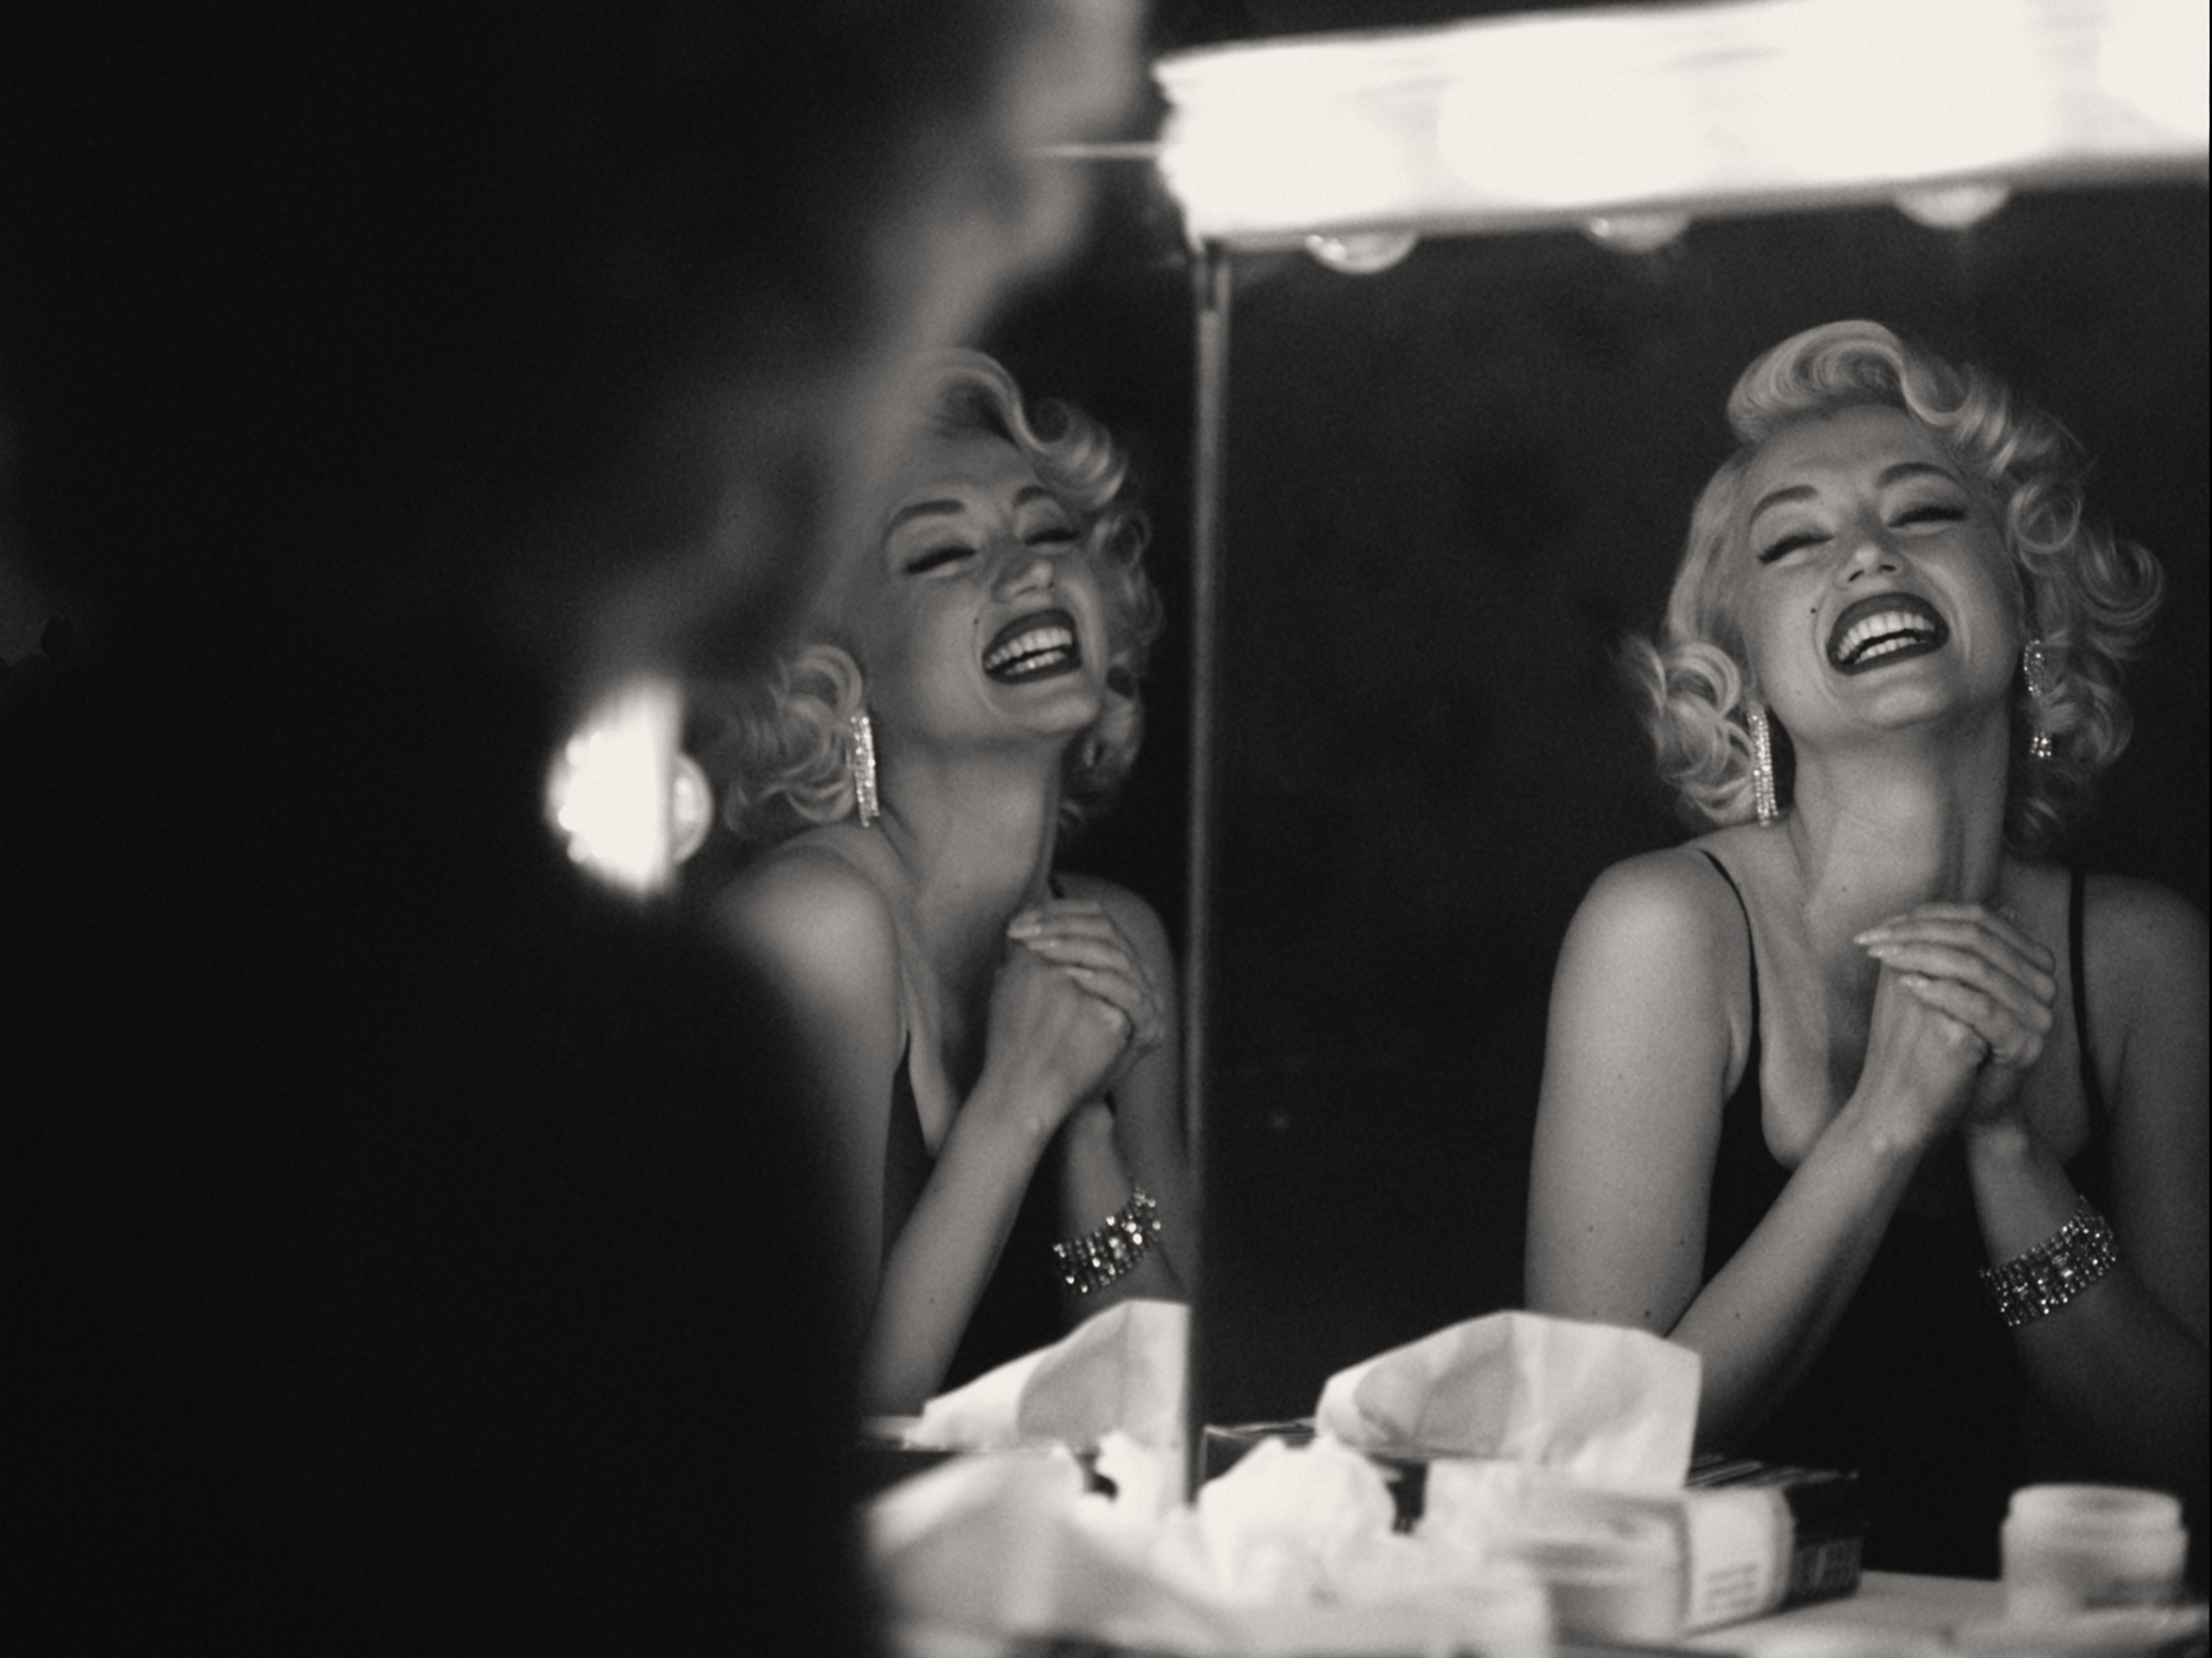 Ana de Armas as Marilyn Monroe smiling in front of a mirror